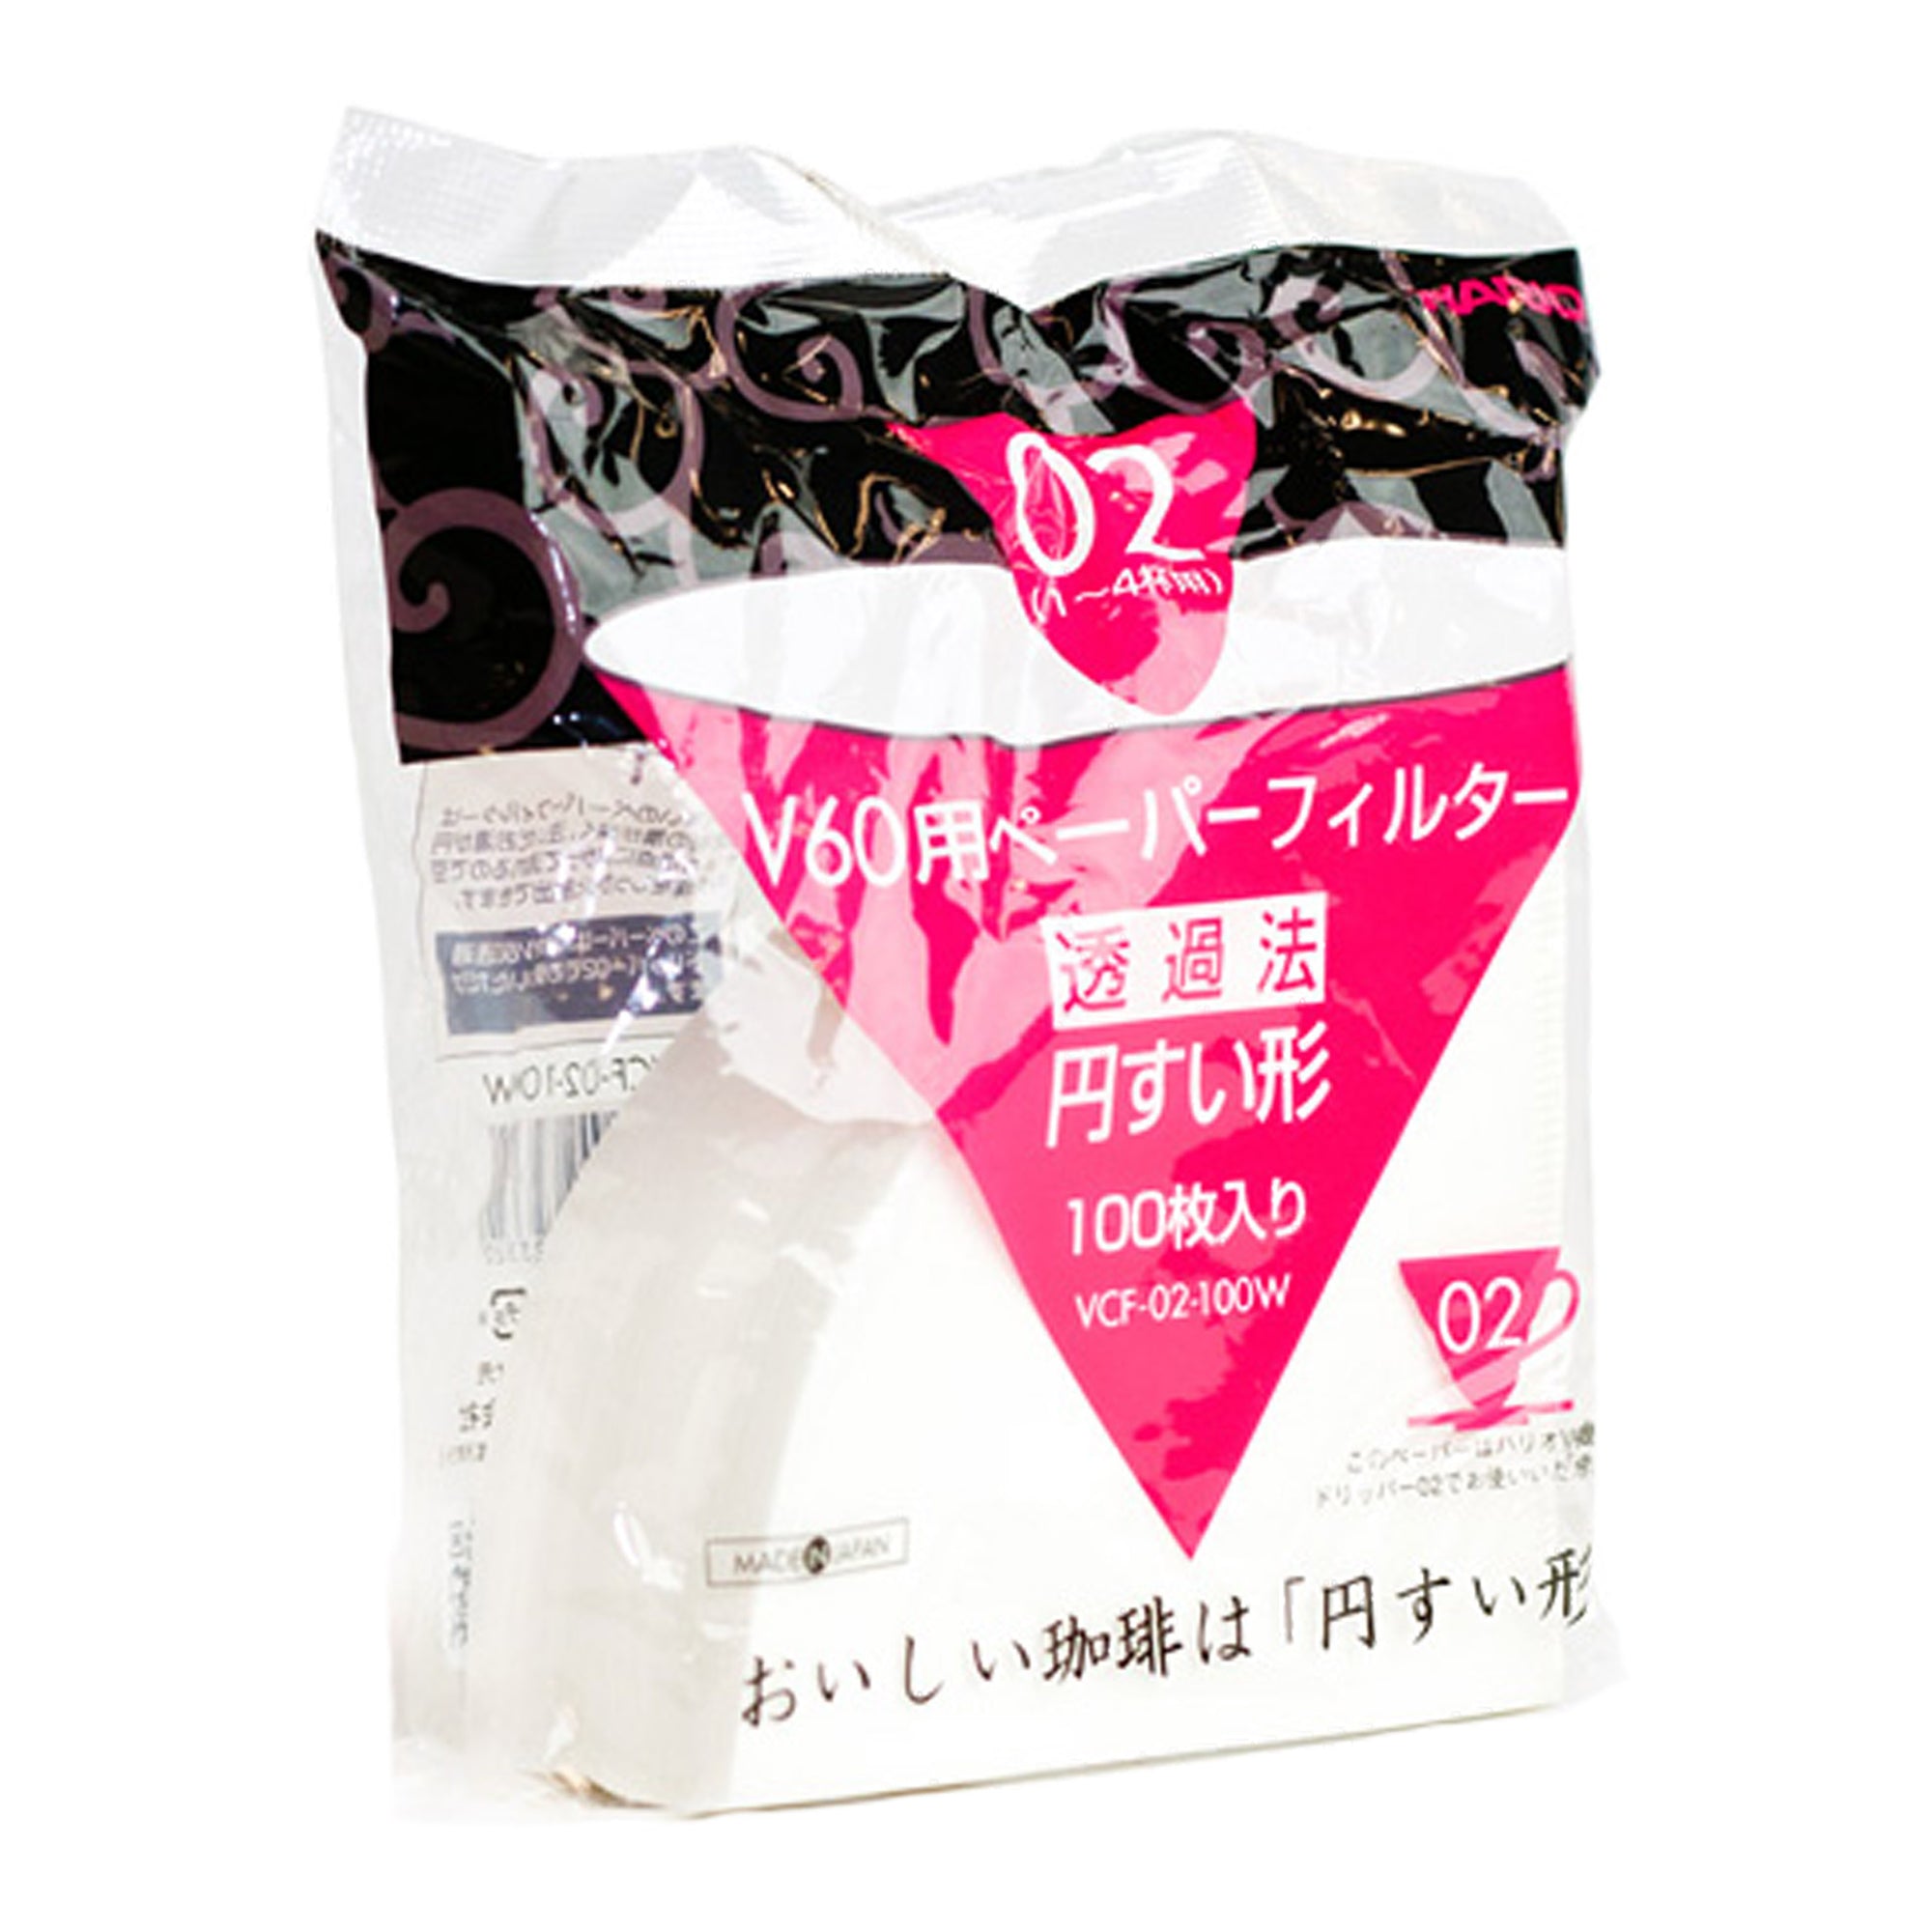 Japan Filter Paper V60 Size 2 Bleached 100pcs – Hario